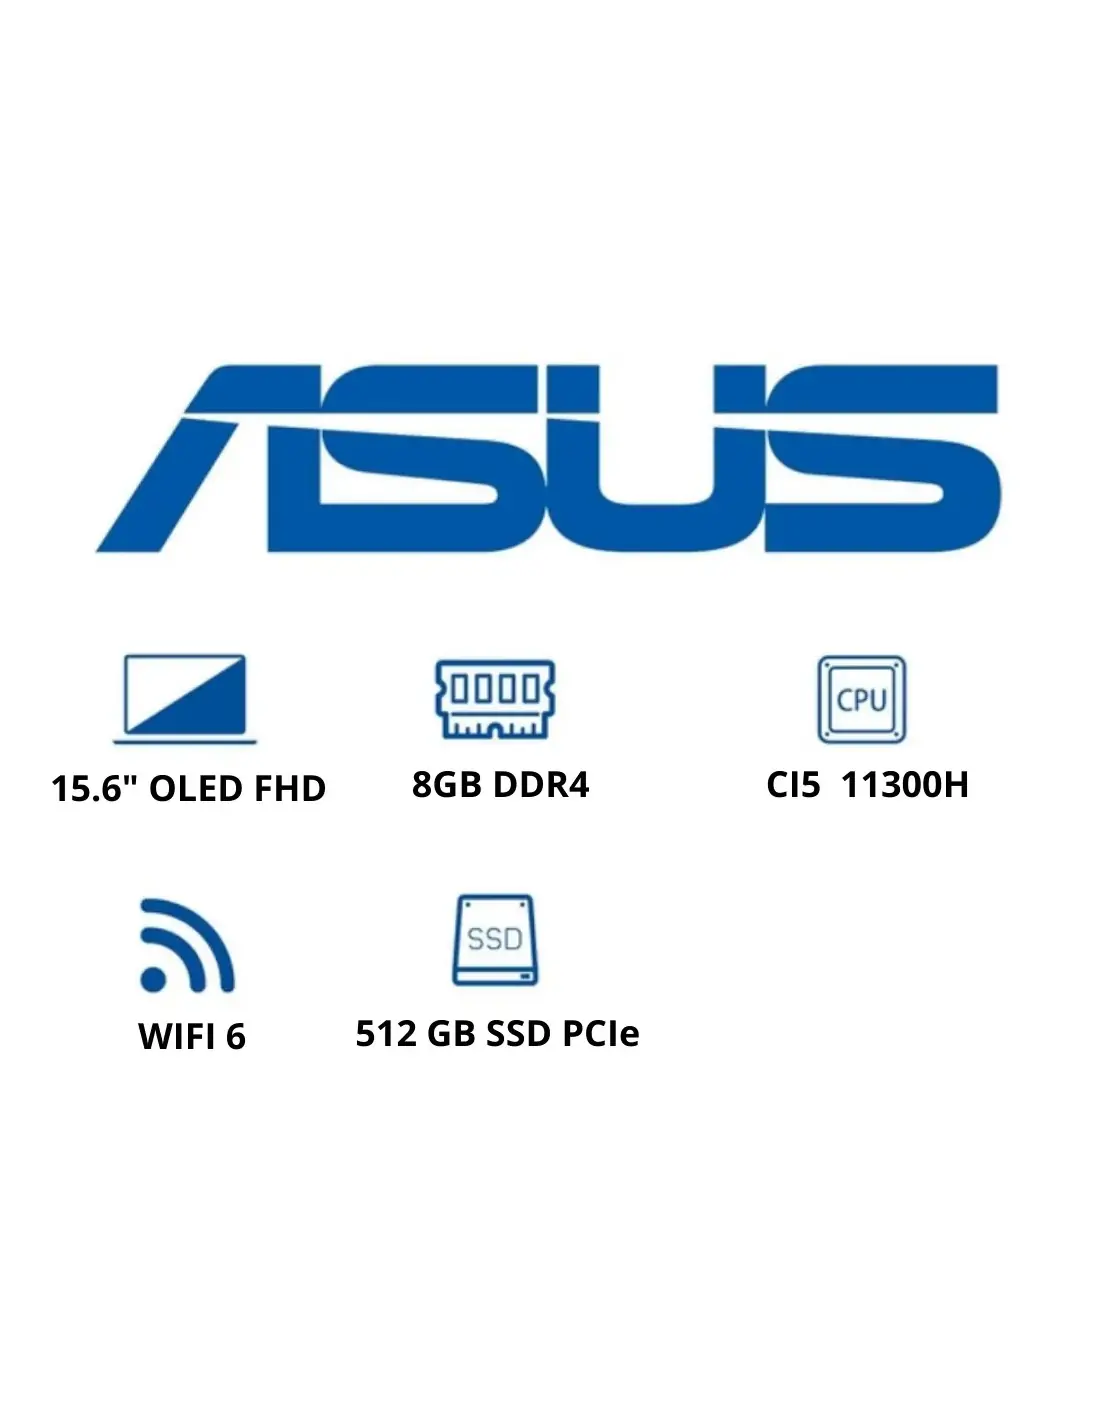 Portátil Asus K3500P Intel CI5 11300H, 8GB, 512SSD PCIe, 15.6 OLED FHD,  W10, RTX 4GB